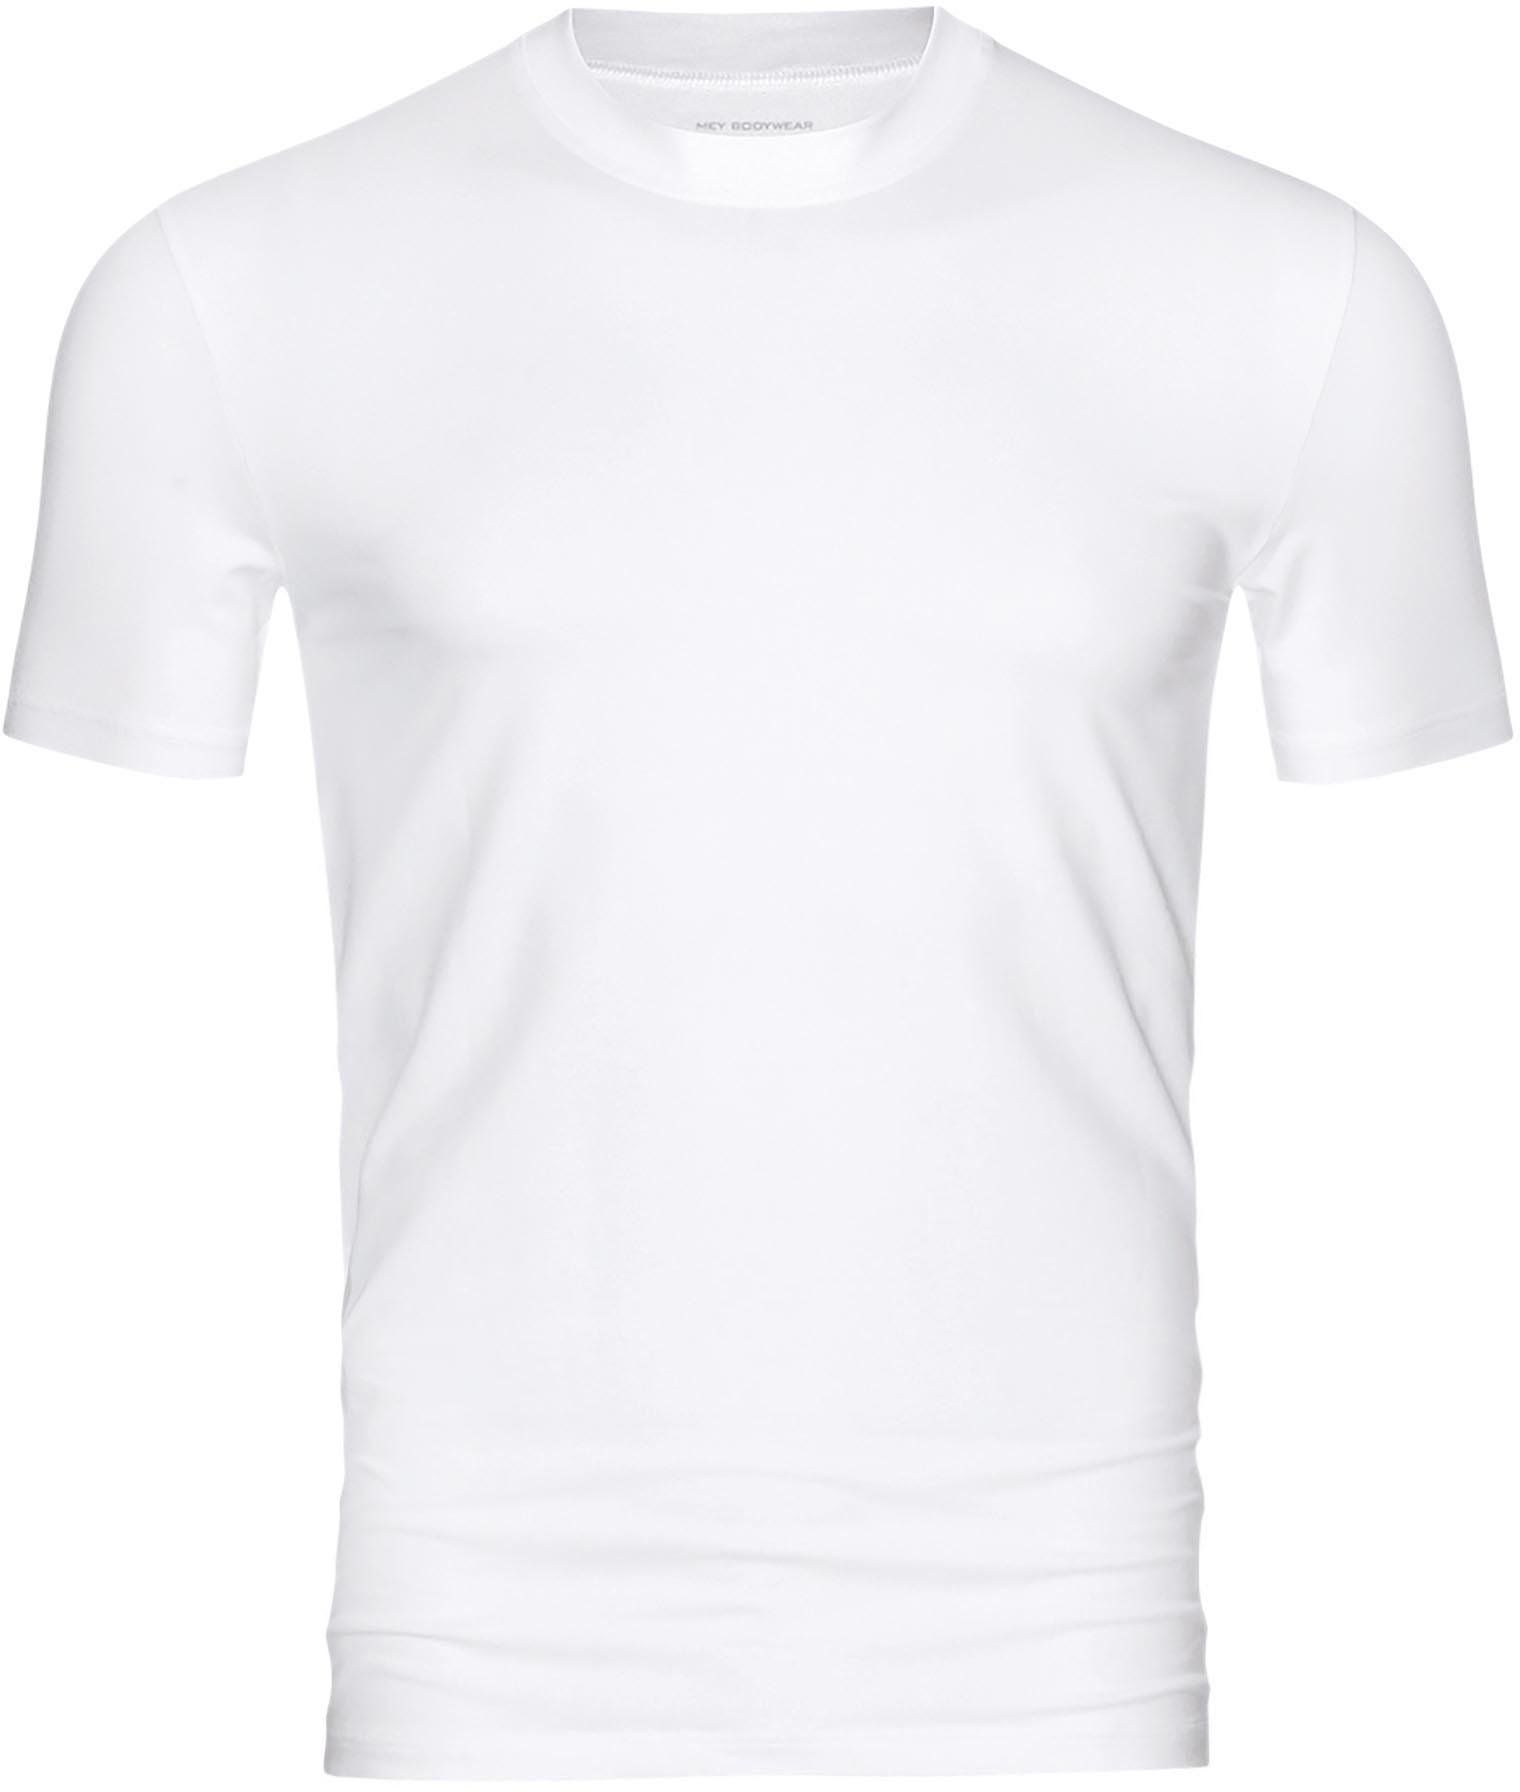 Mey Dry Cotton Olympia T-shirt White size XXL